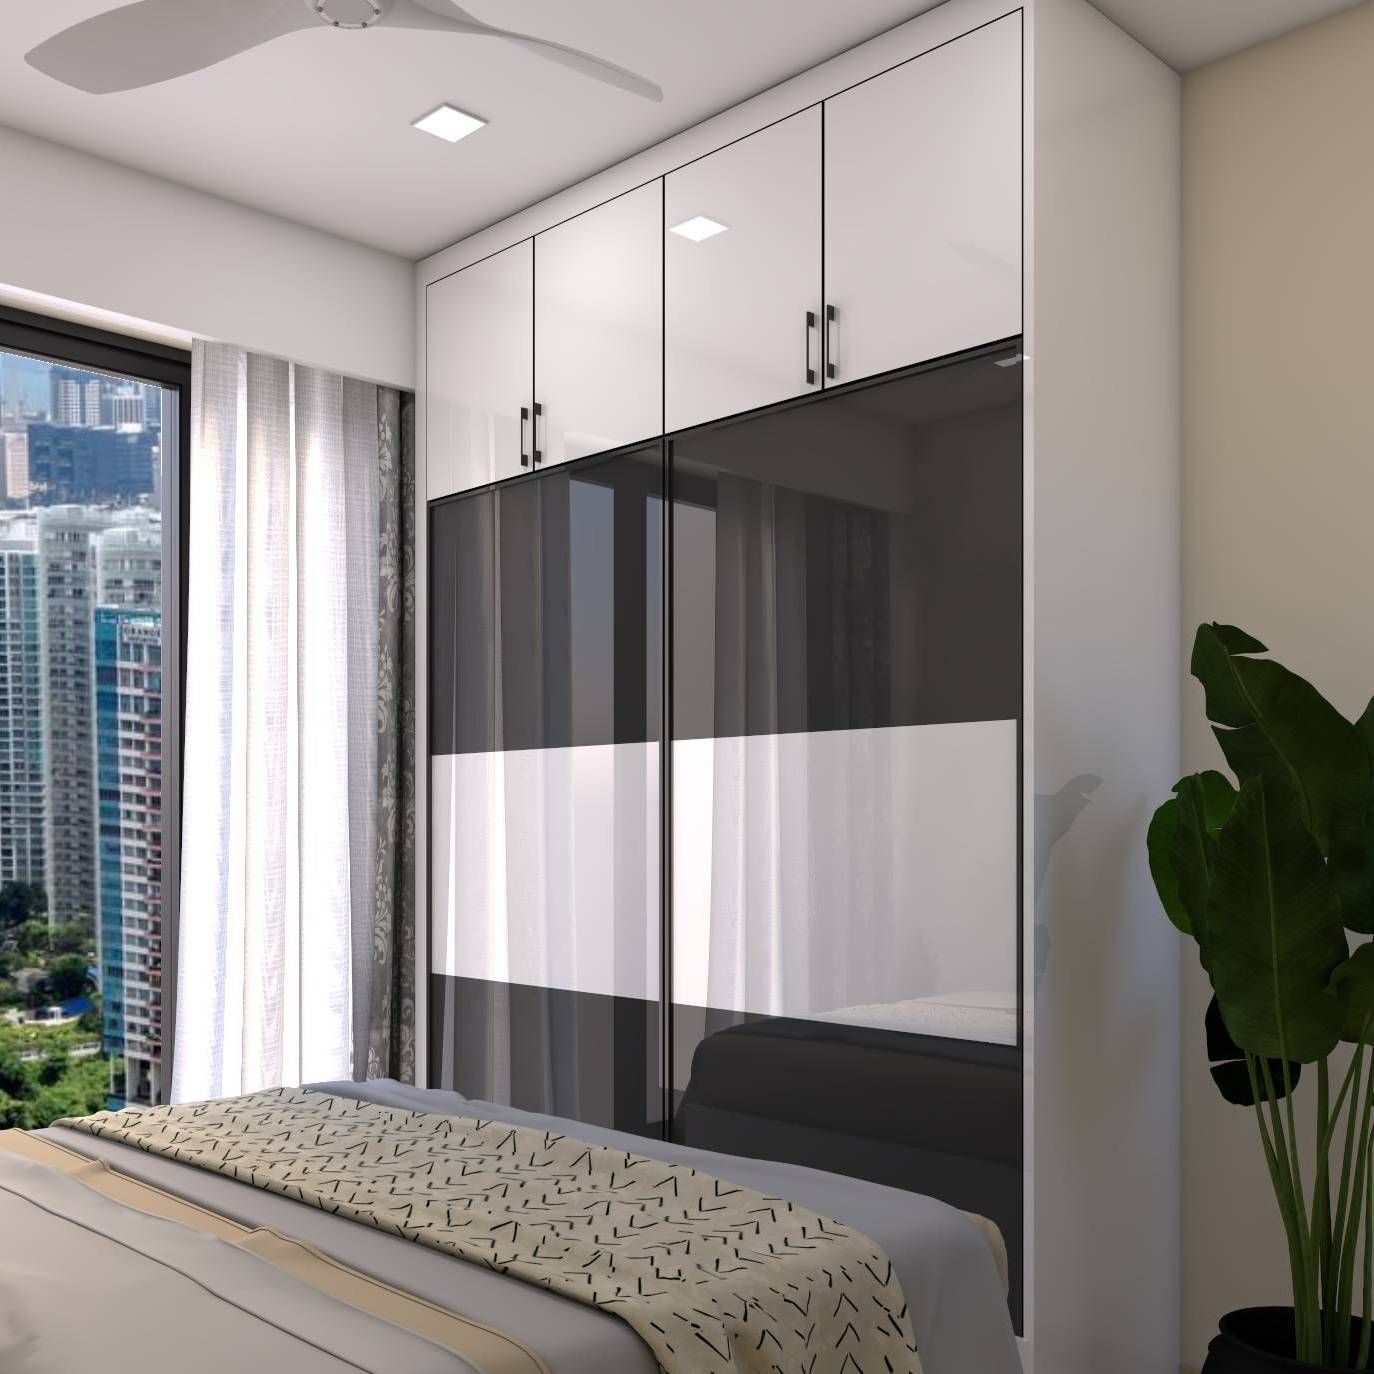 2-Door Bedroom Wardrobe Design With A Glossy Finish | Livspace